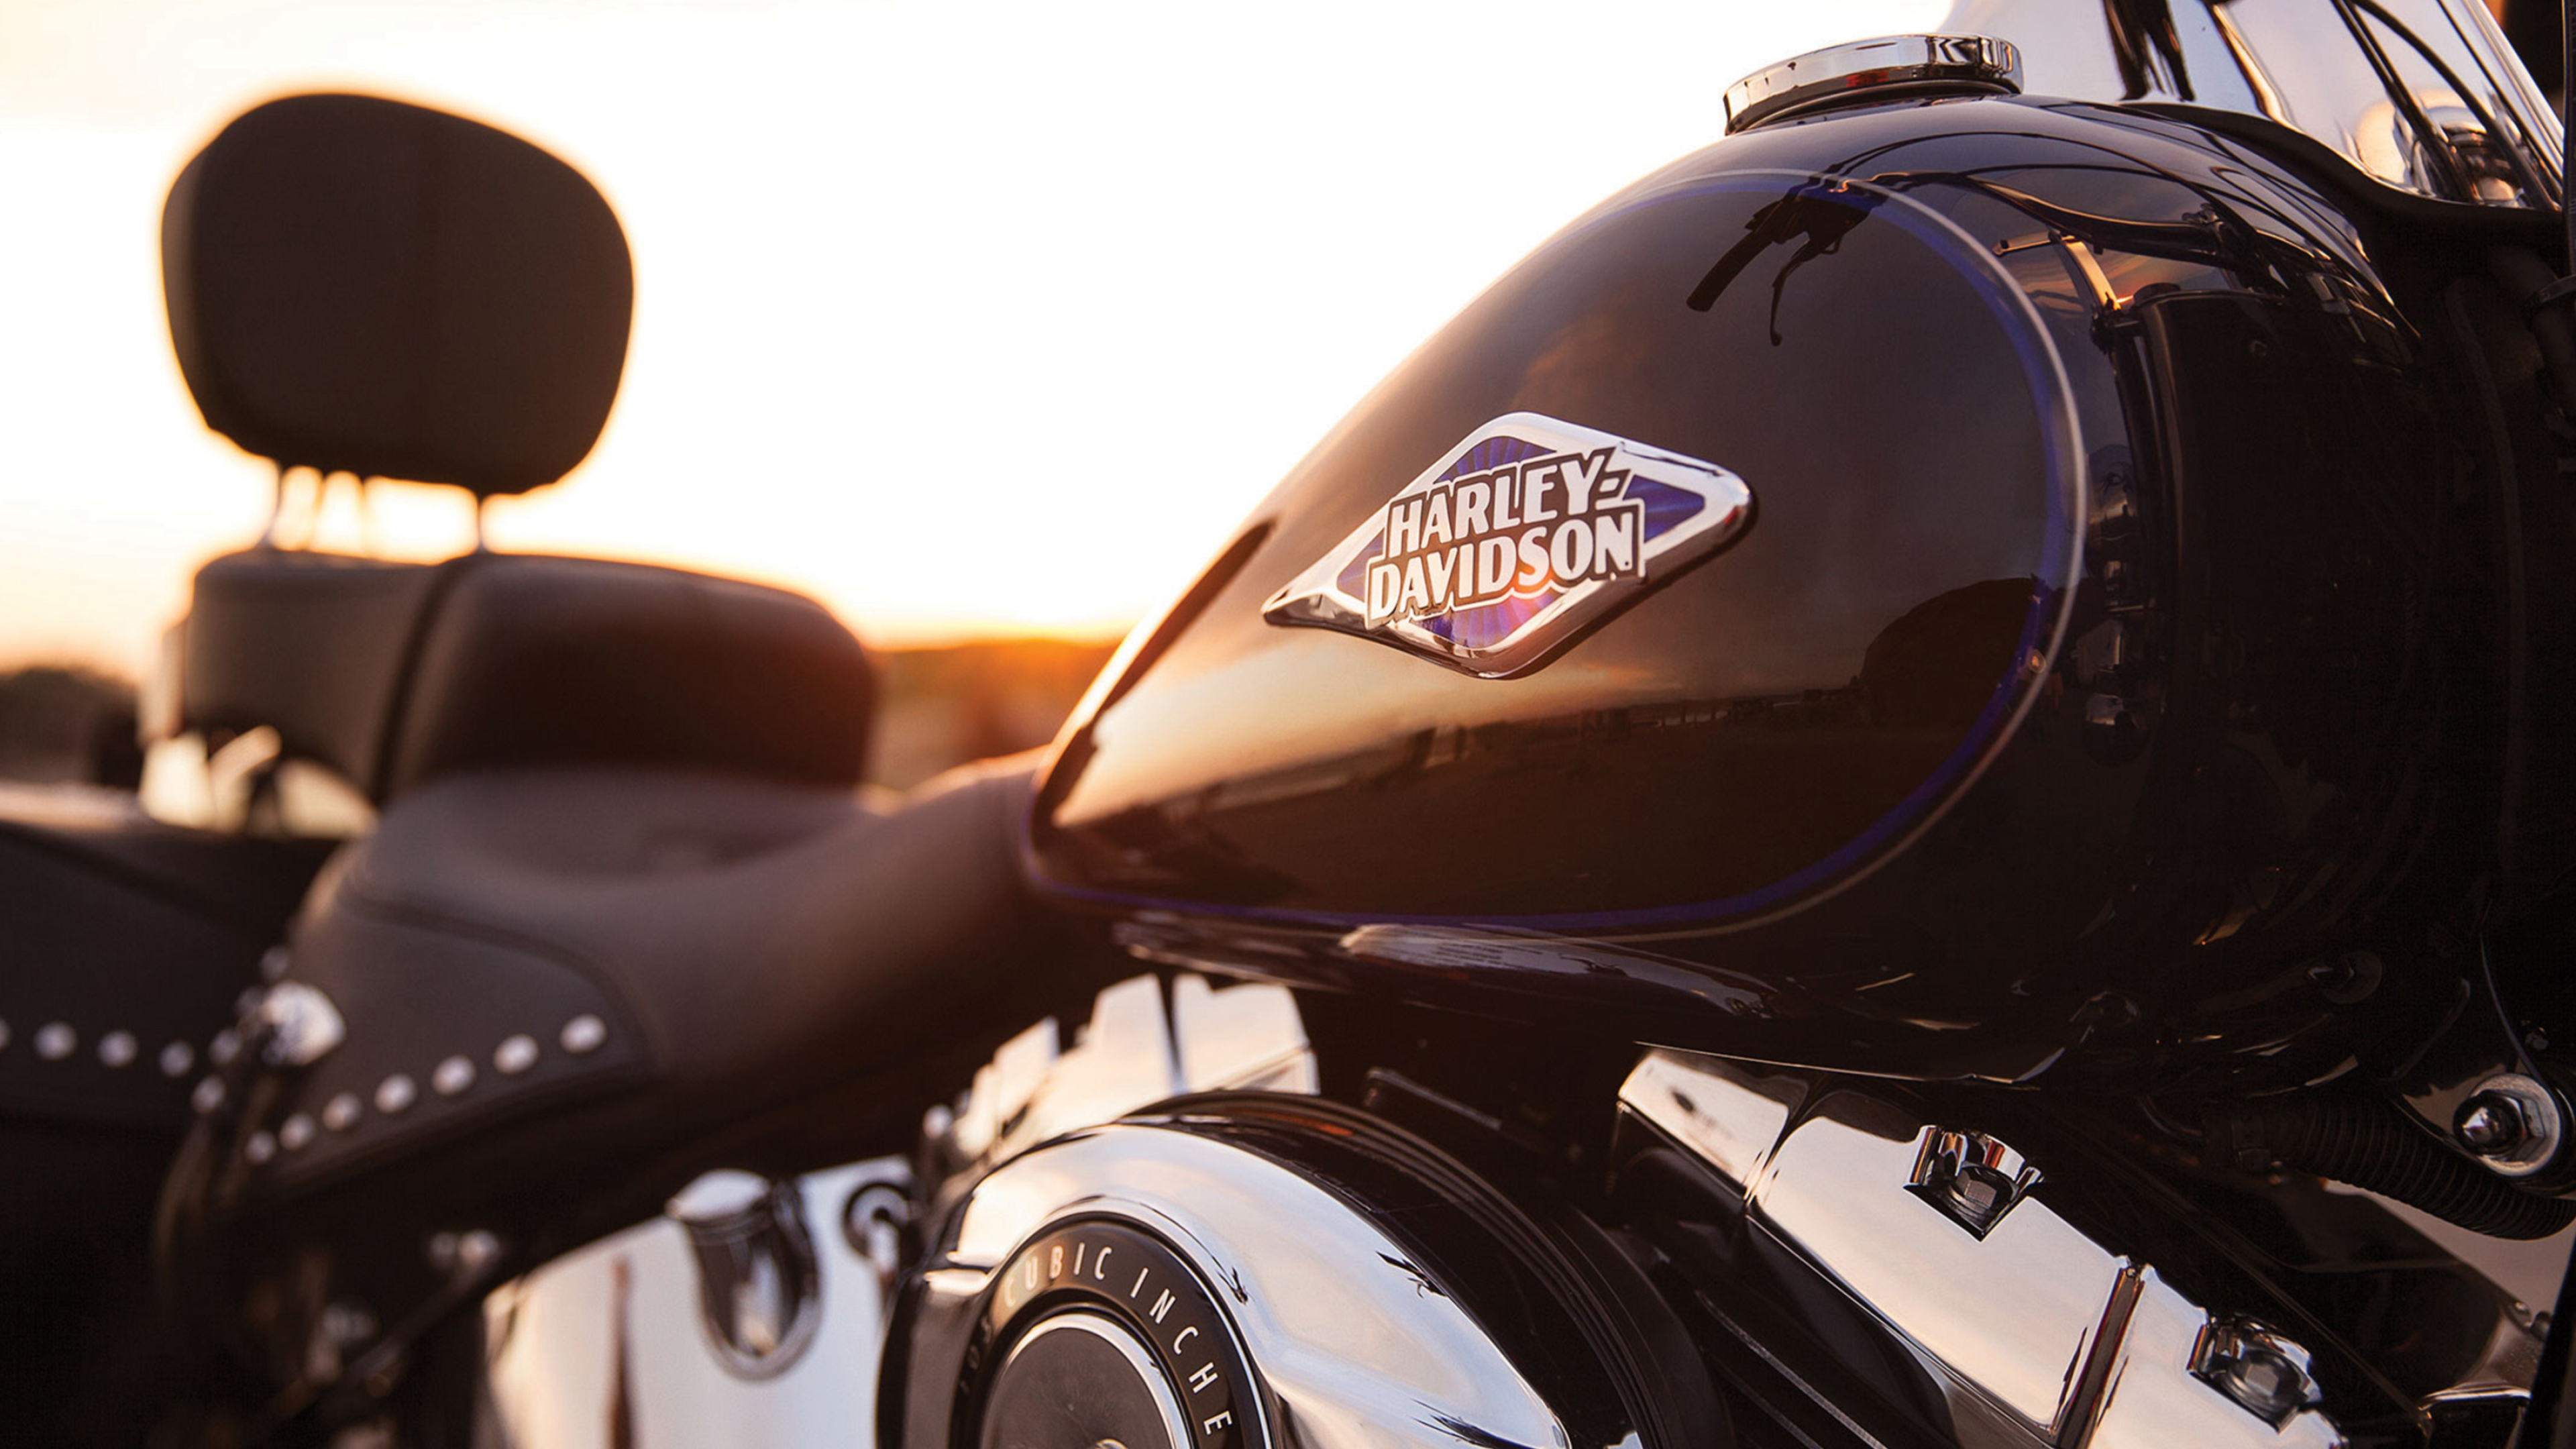 Harley Davidson softail, Motorcycle wallpapers, 4K Ultra HD, Classic design, 3840x2160 4K Desktop